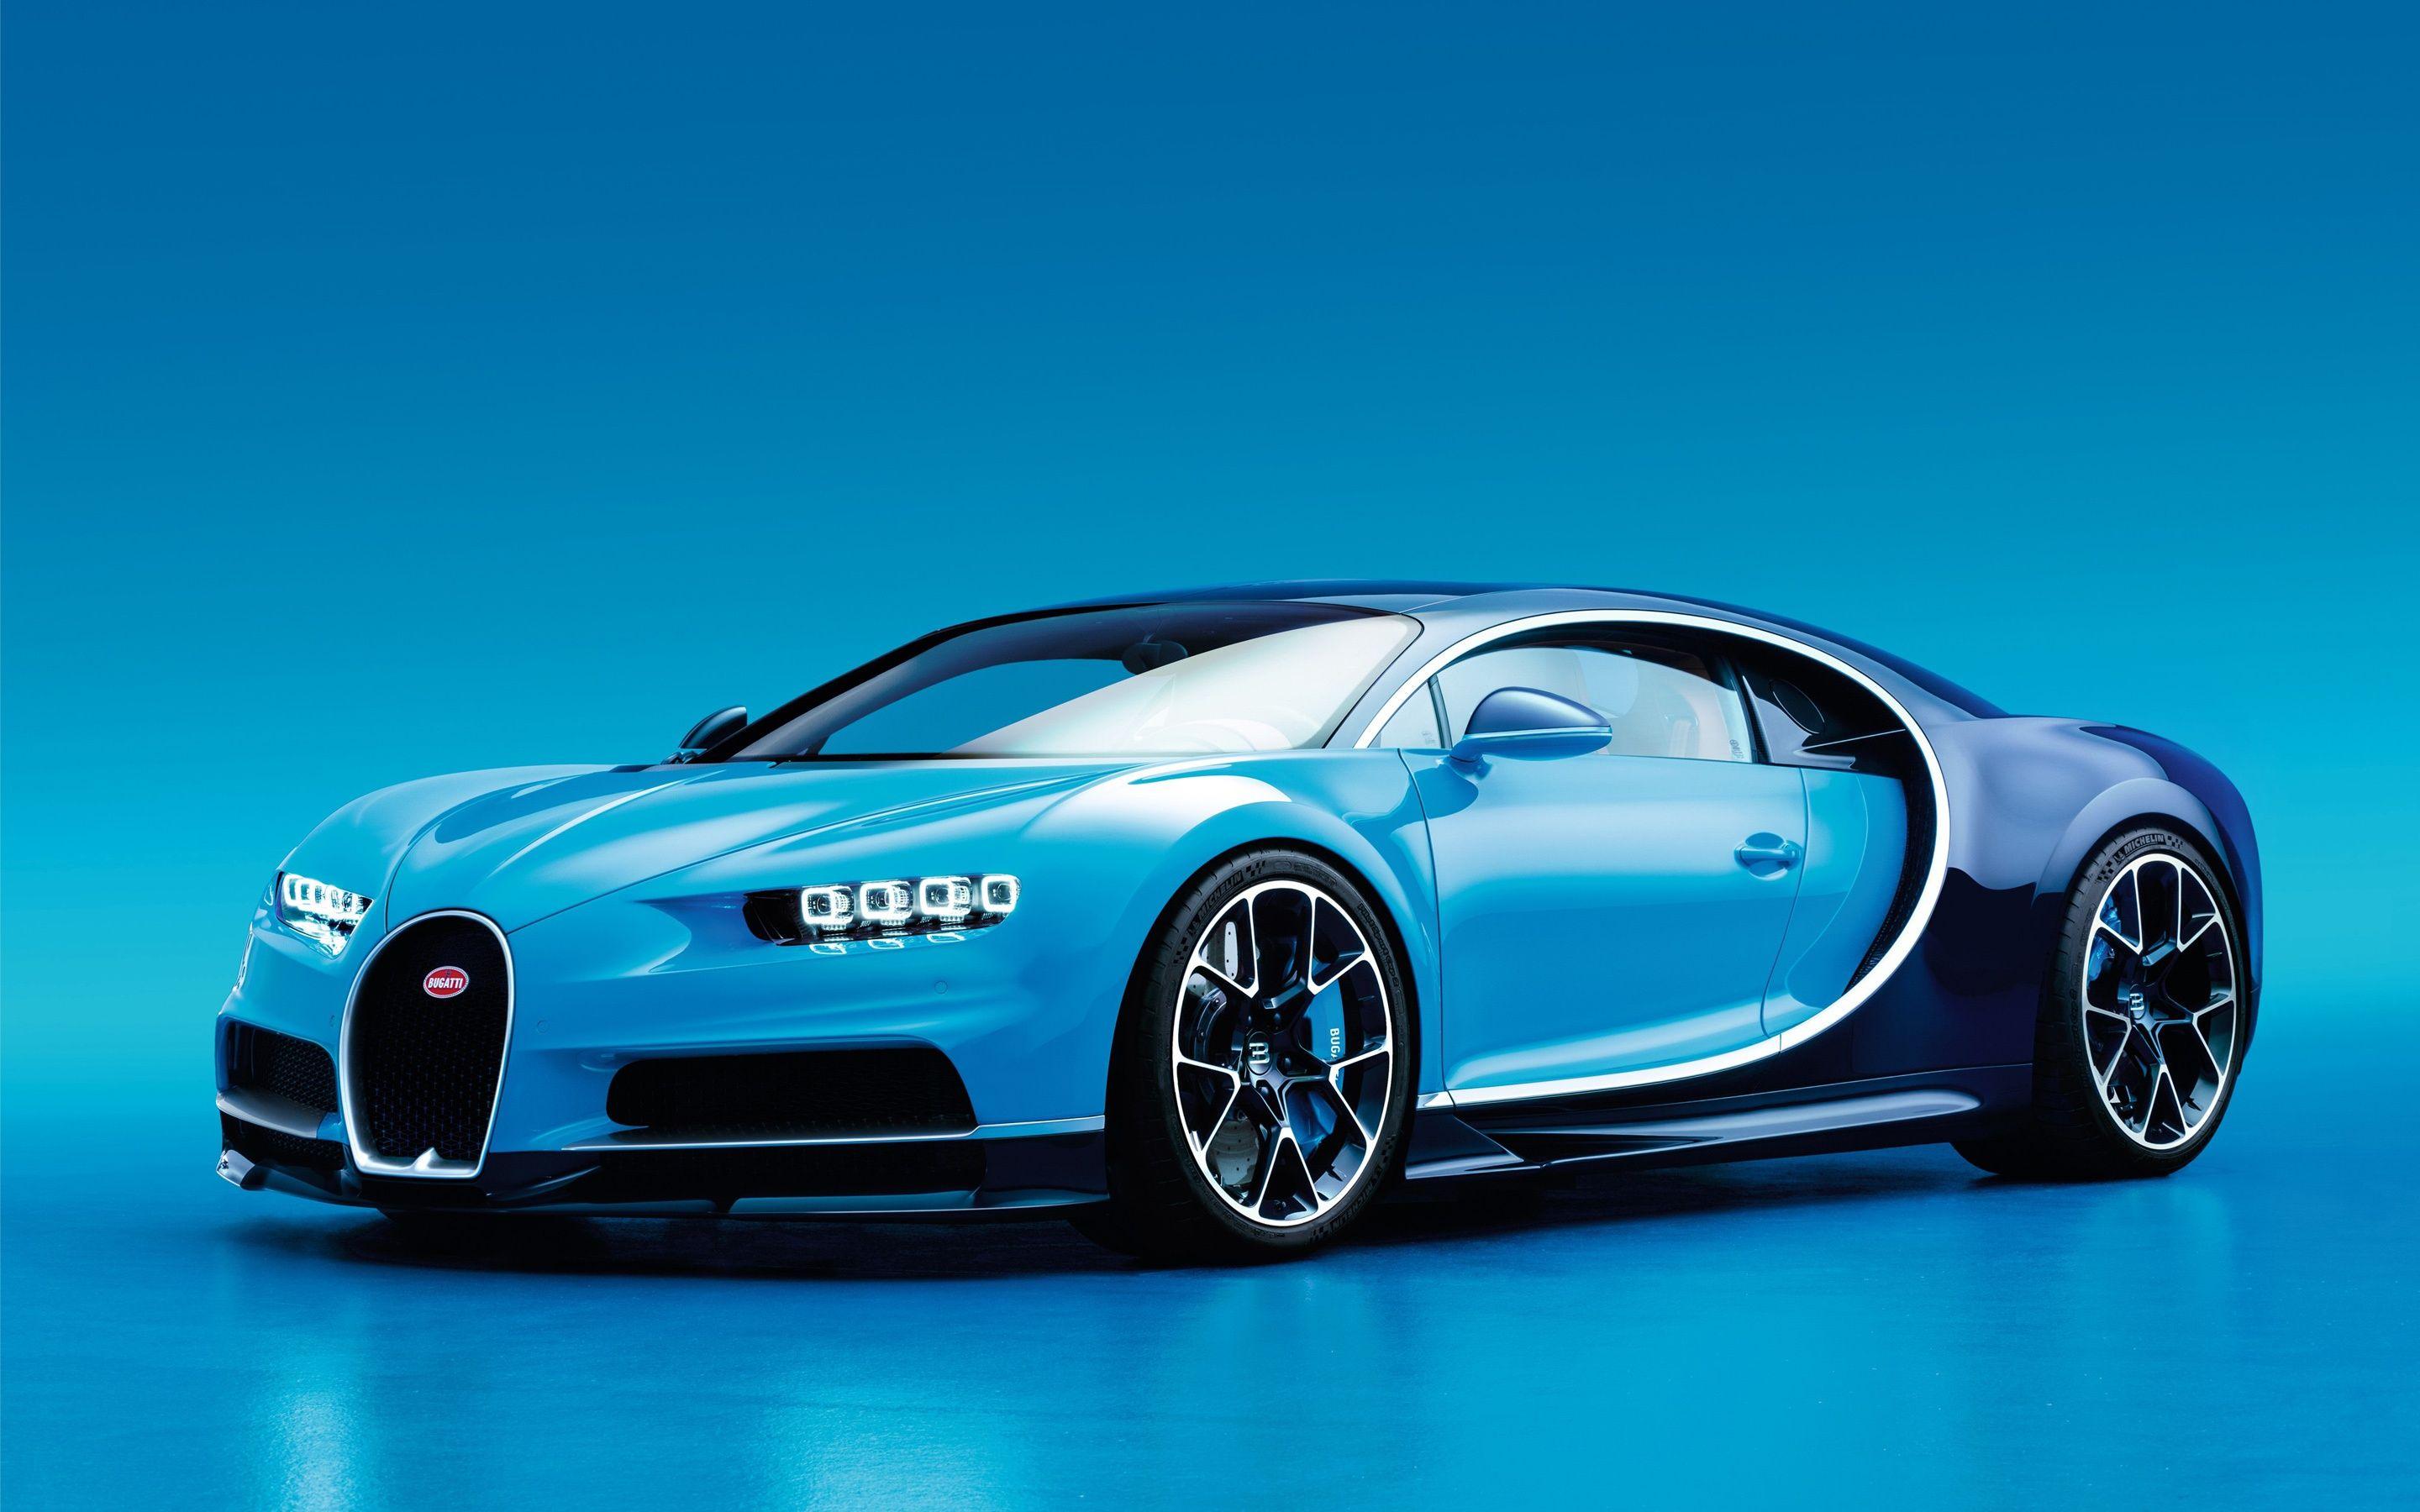 Blue Bugatti Veyron Wallpaper Free Blue Bugatti Veyron